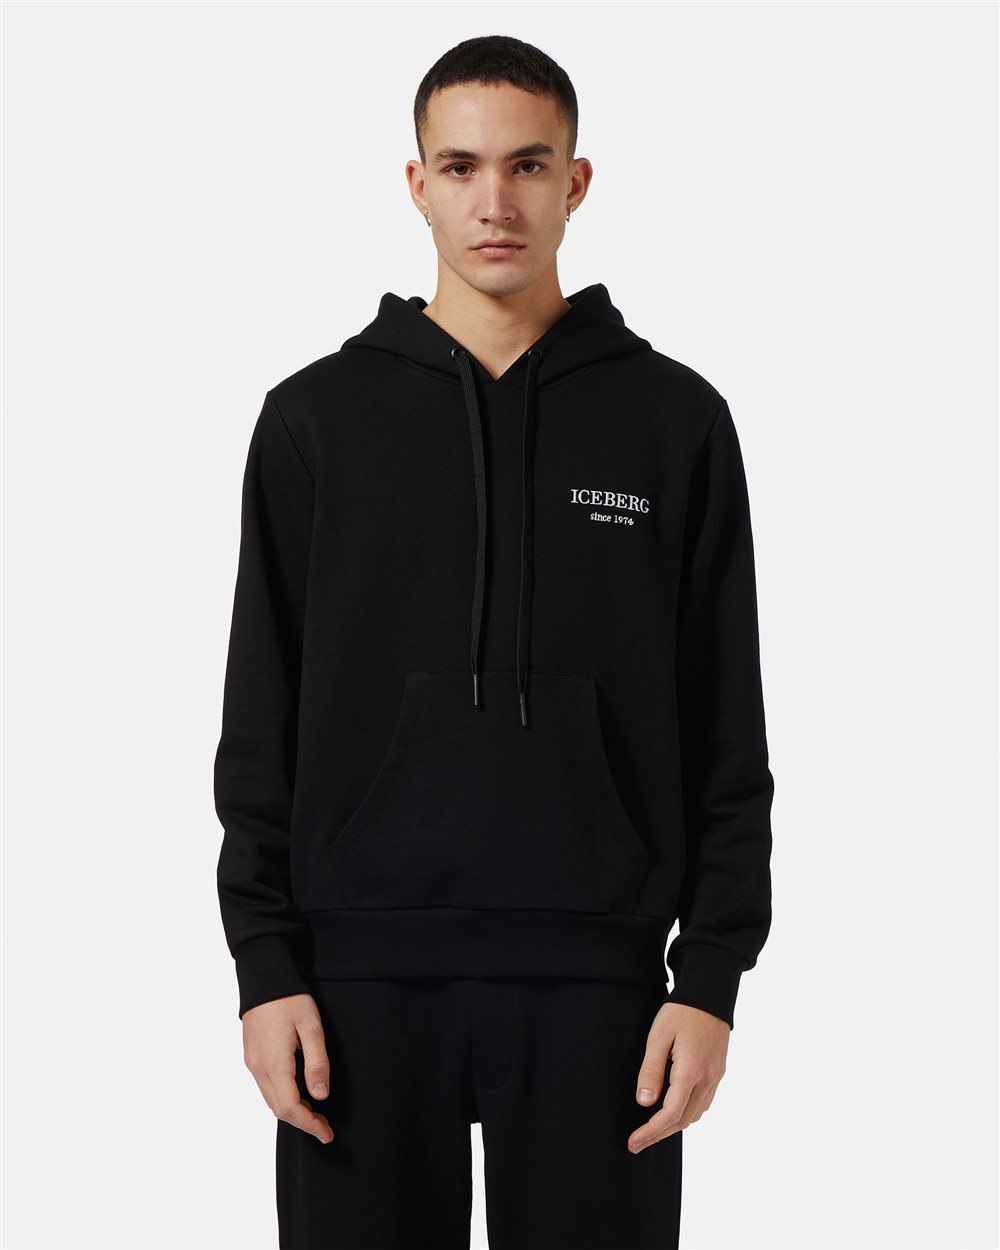 Hoodie sweatshirt with logo - Iceberg - Official Website